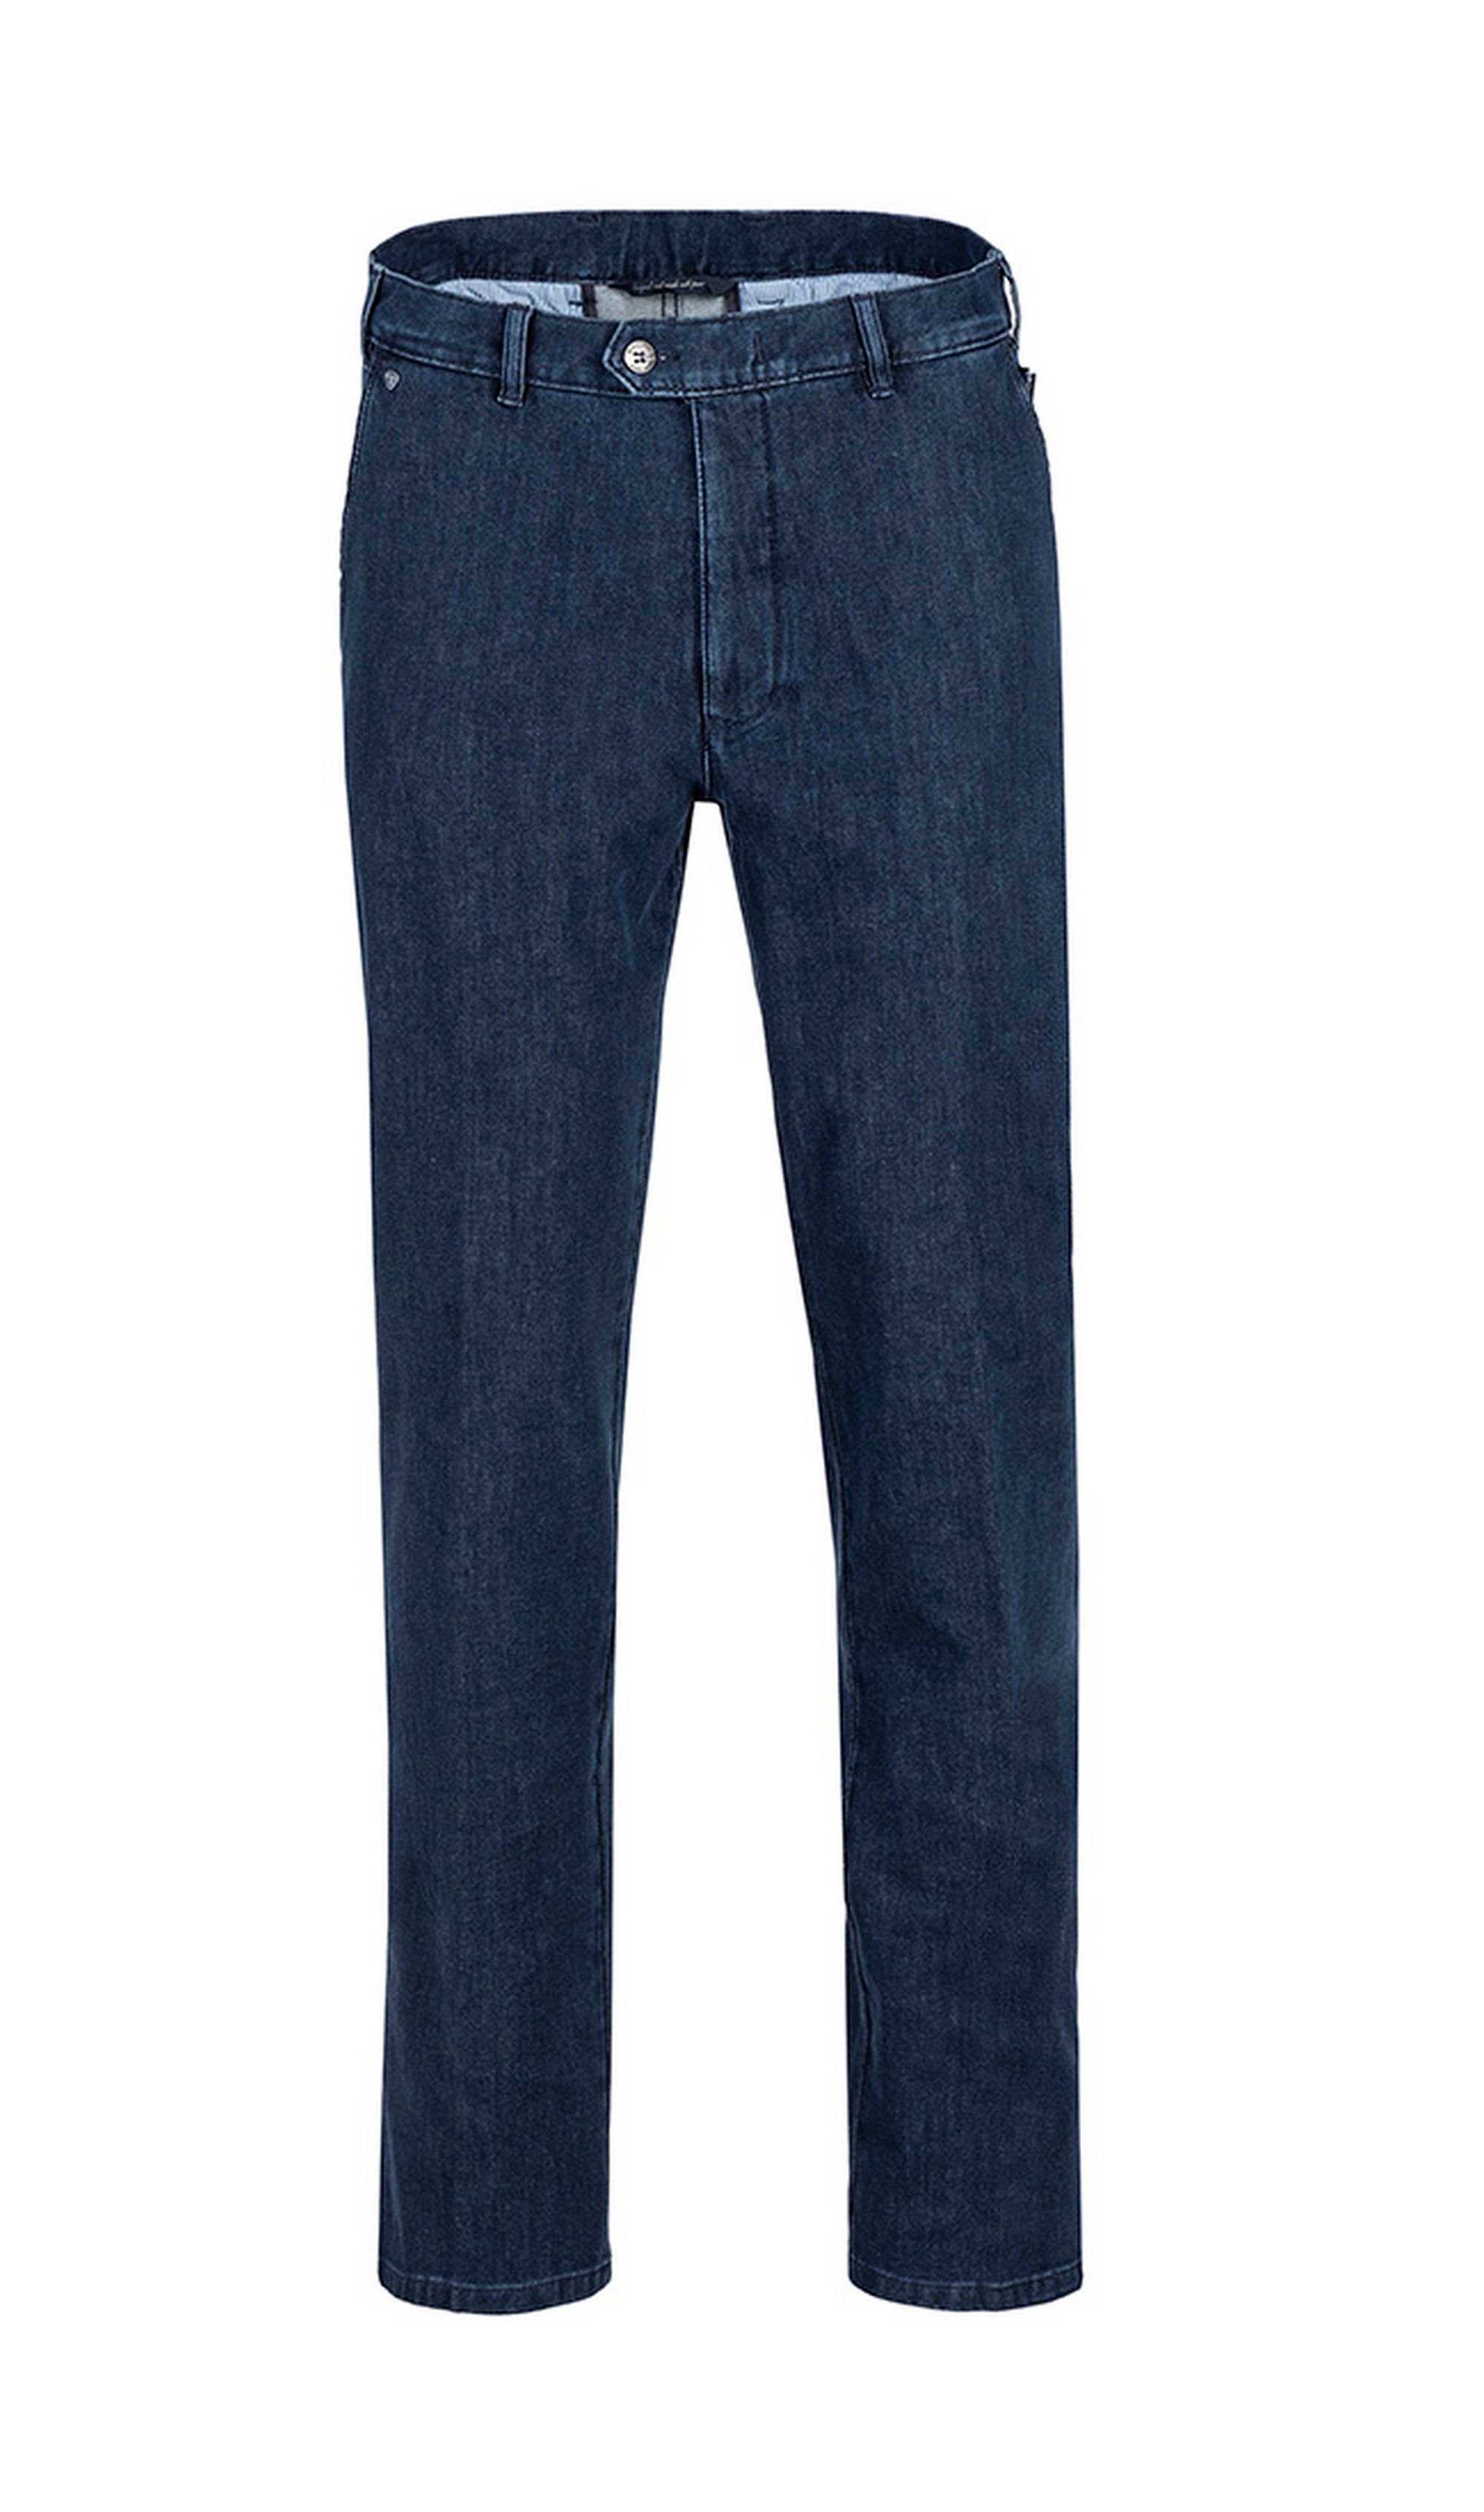 Brühl Bequeme Jeans Parma DO mit optimalem Tragekomfort blau